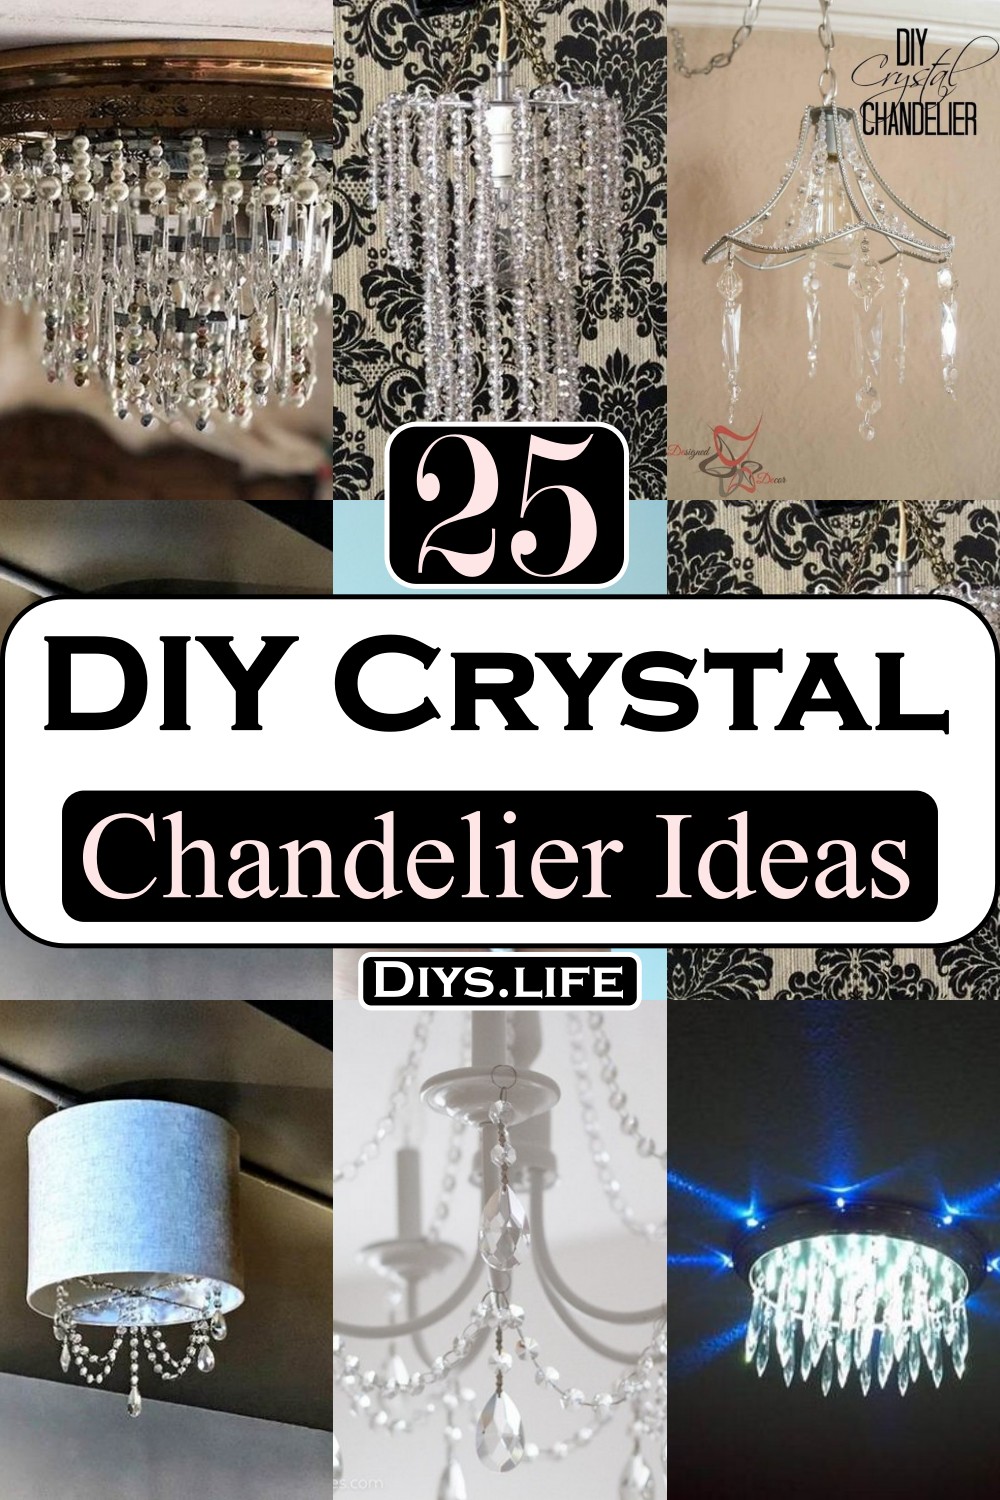 DIY Crystal Chandelier Ideas